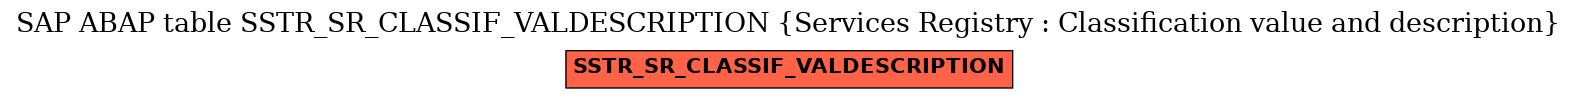 E-R Diagram for table SSTR_SR_CLASSIF_VALDESCRIPTION (Services Registry : Classification value and description)